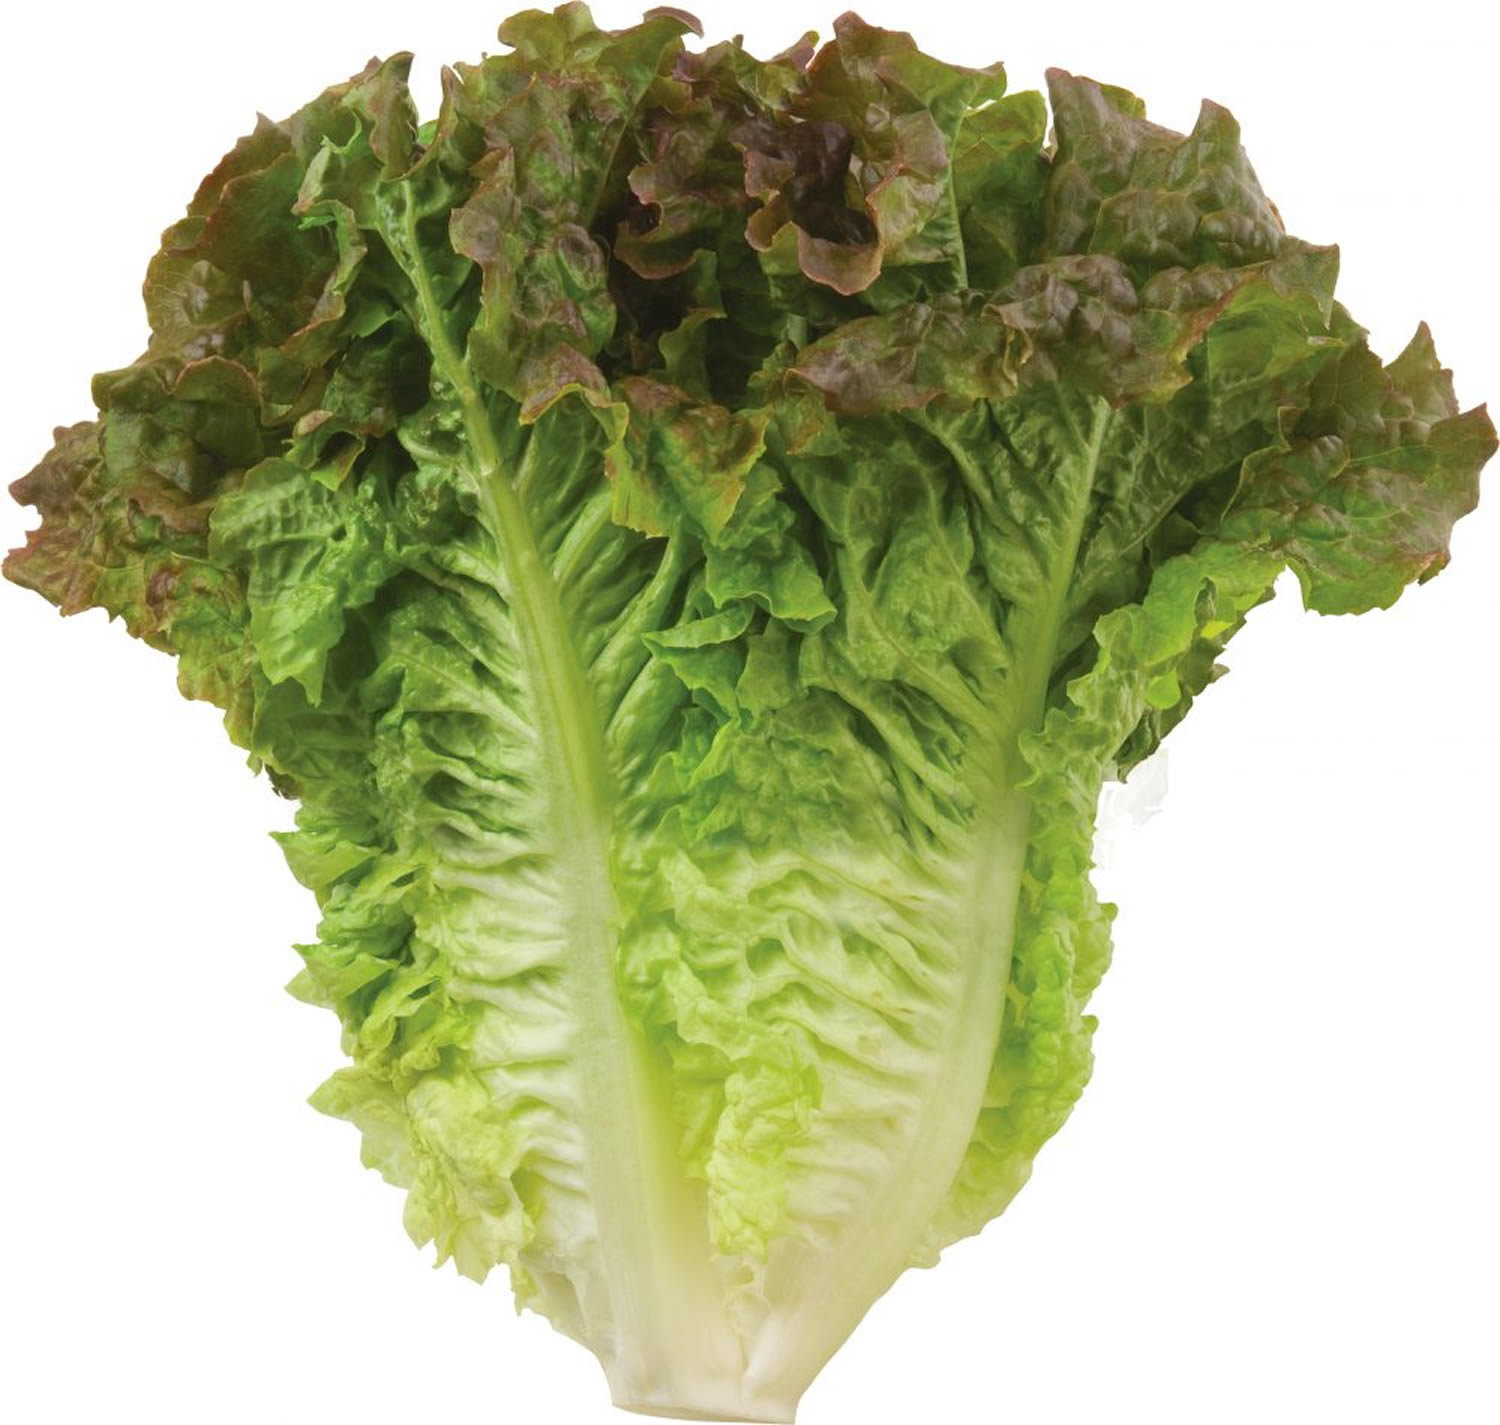 cos lettuce